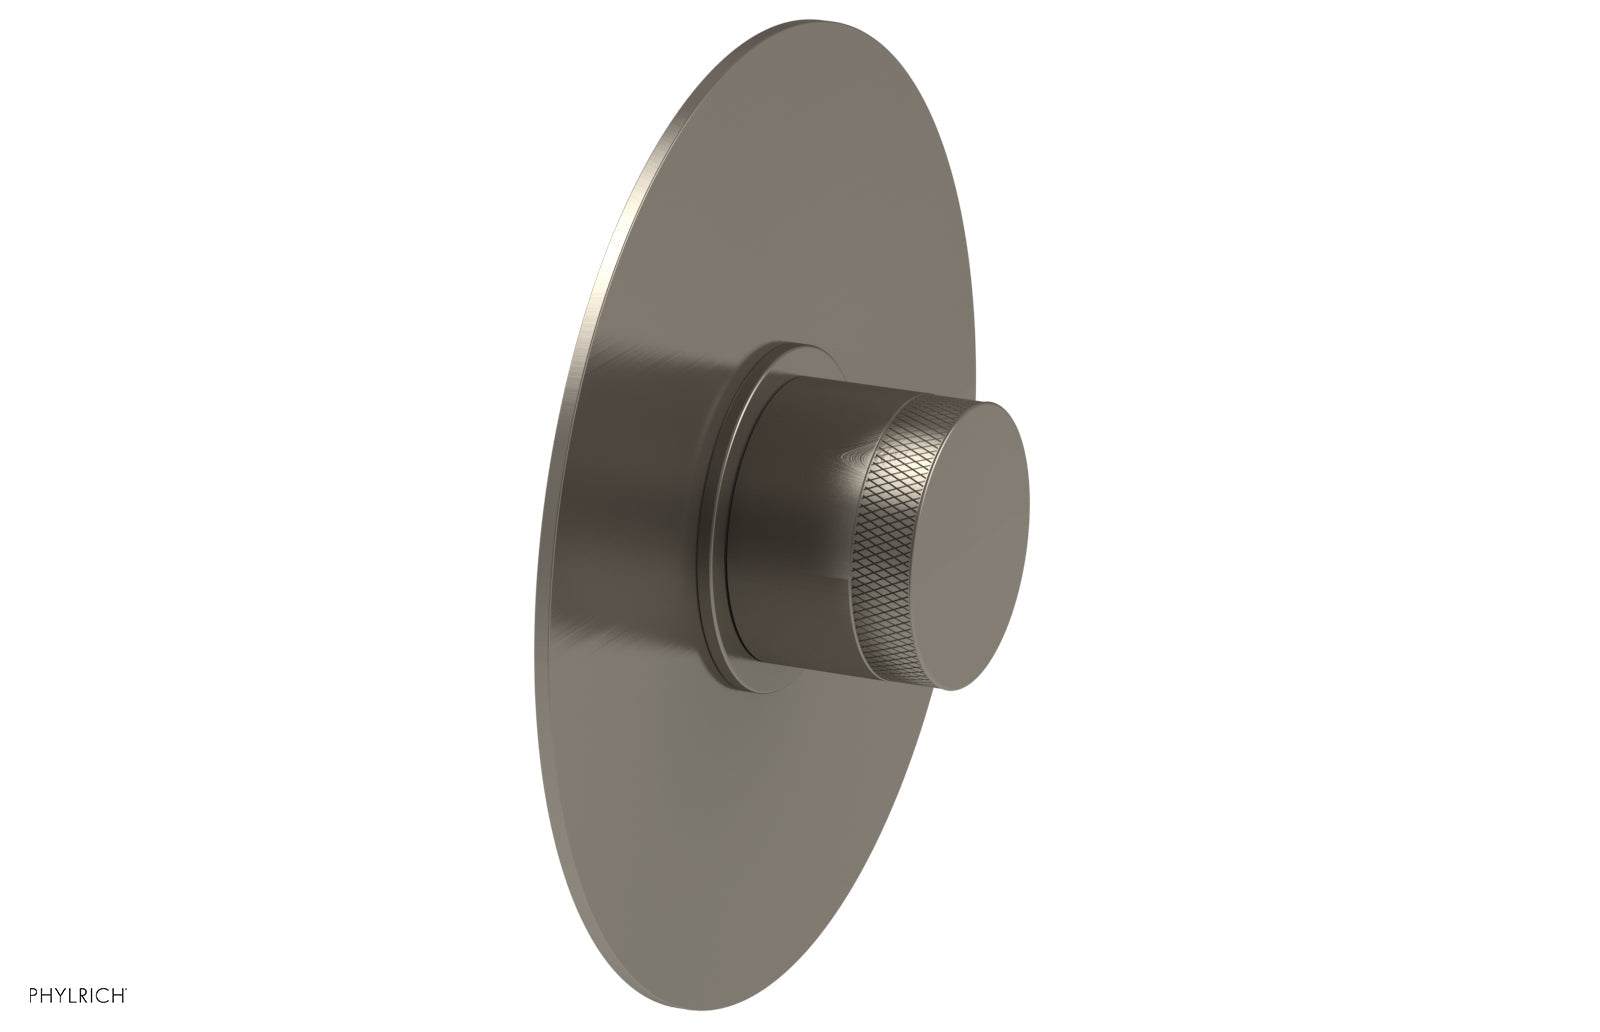 Phylrich BASIC II Pressure Balance Round Shower Plate & Handle Trim, Knurled Handle